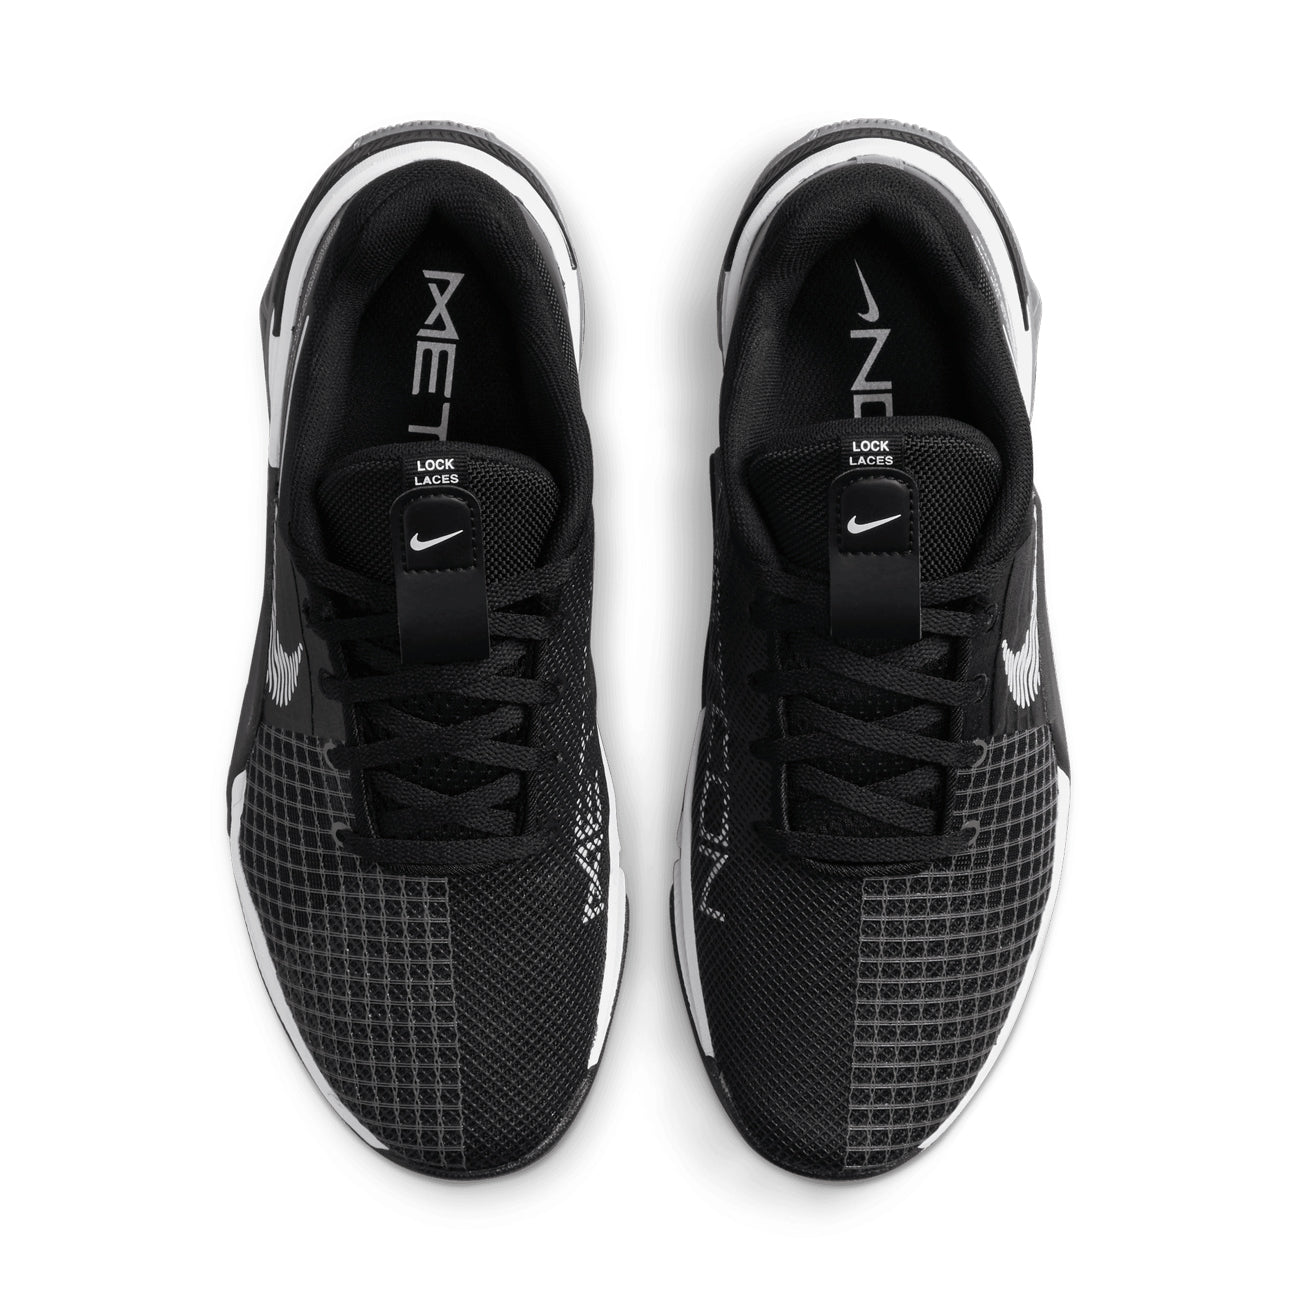 Nike Metcon 7 Black Smoke Grey (Women's)